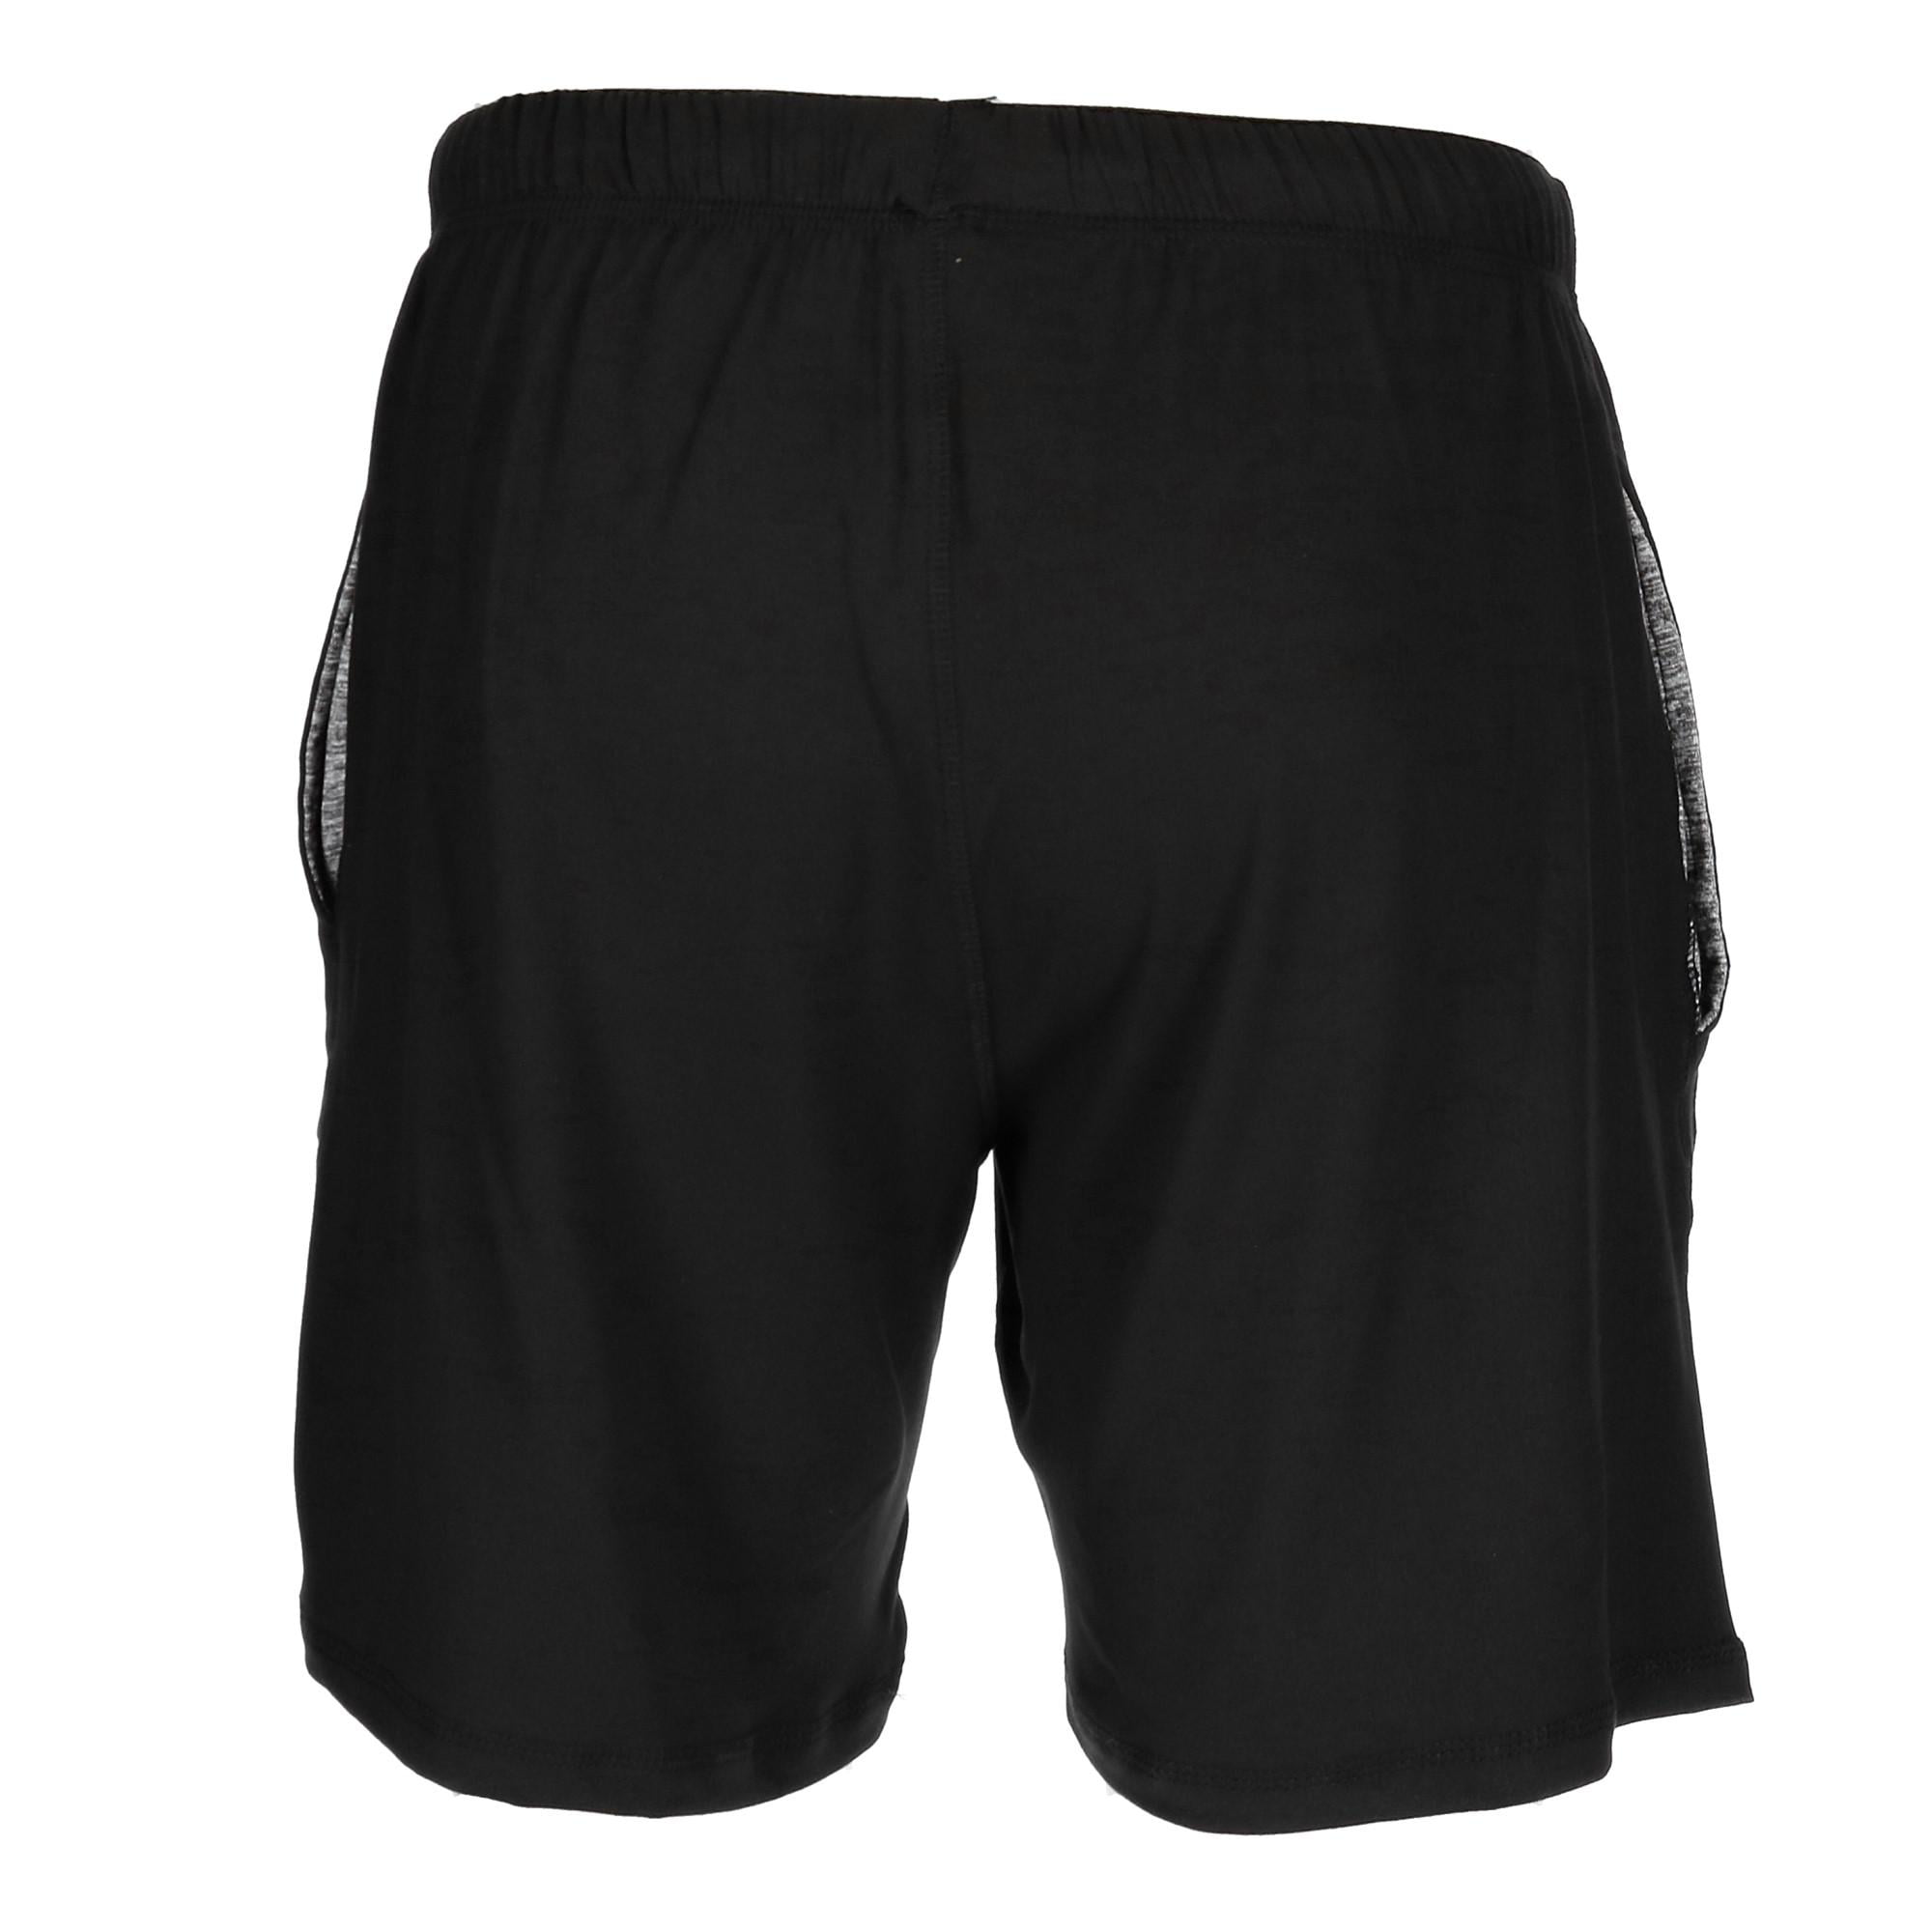 Hanes Men's Big and Tall Knit Sleep Shorts | Walmart Canada